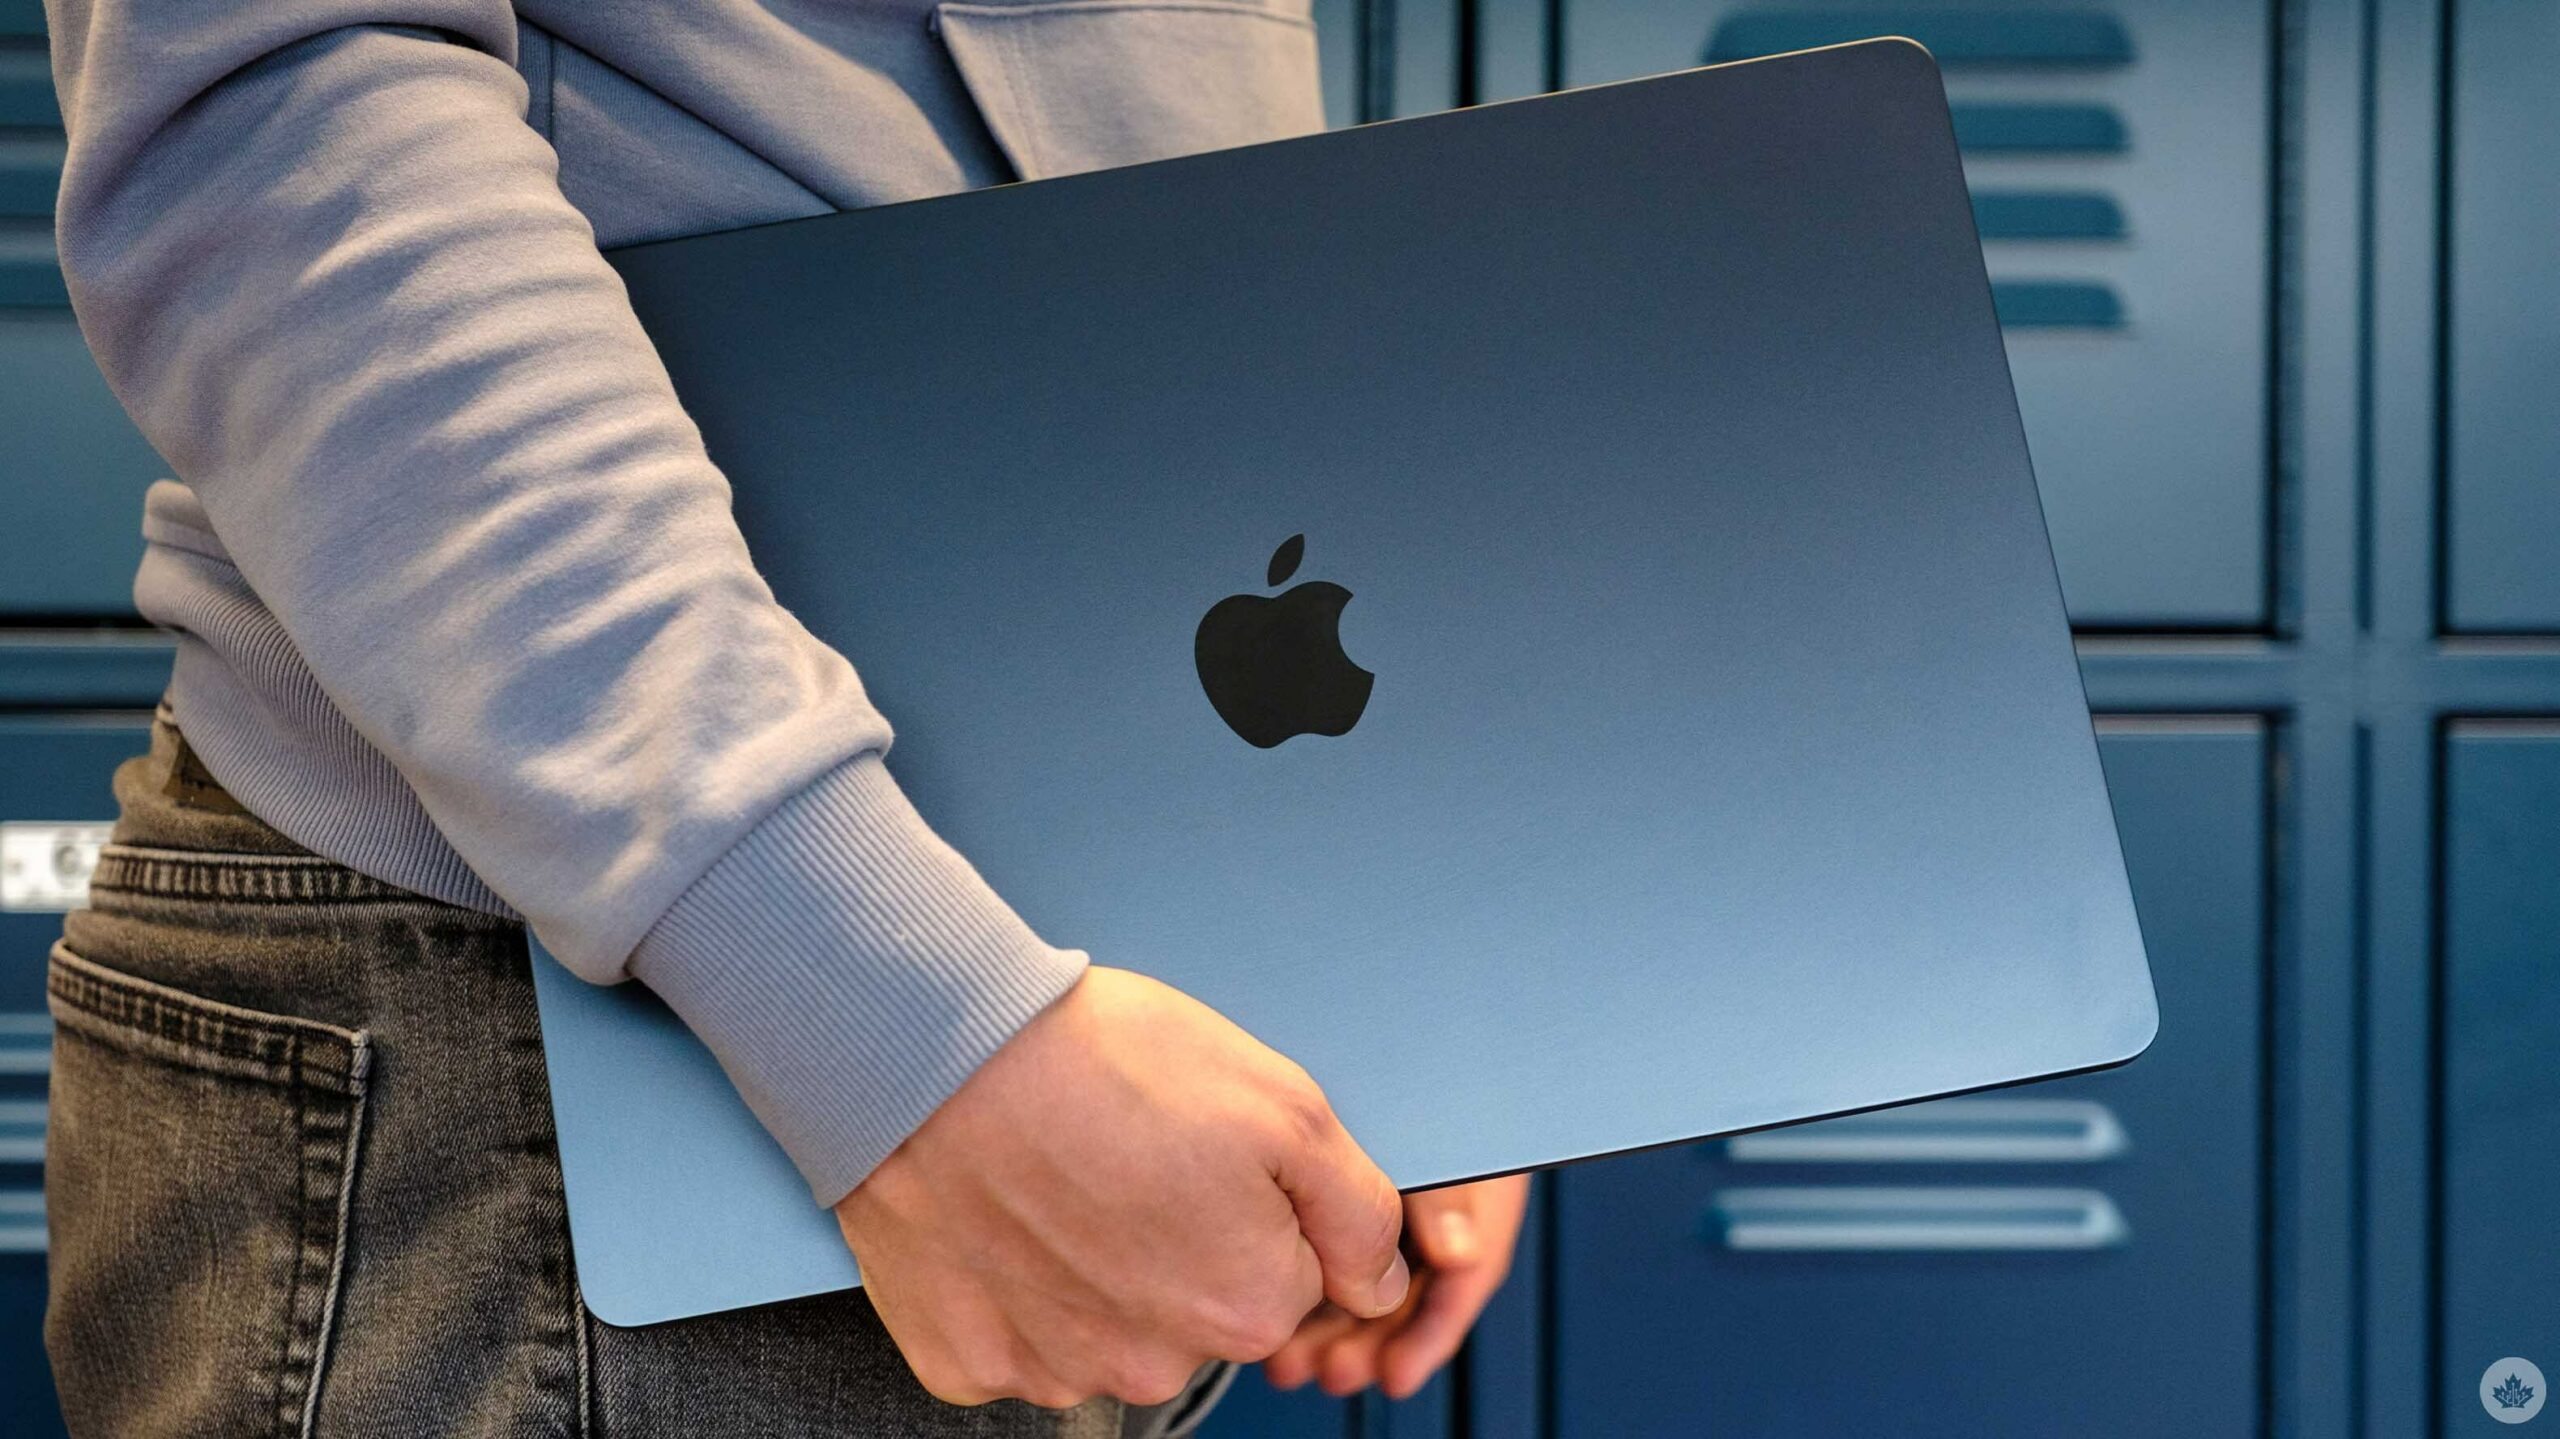 Apple's rumored 15-inch MacBook Air is long overdue